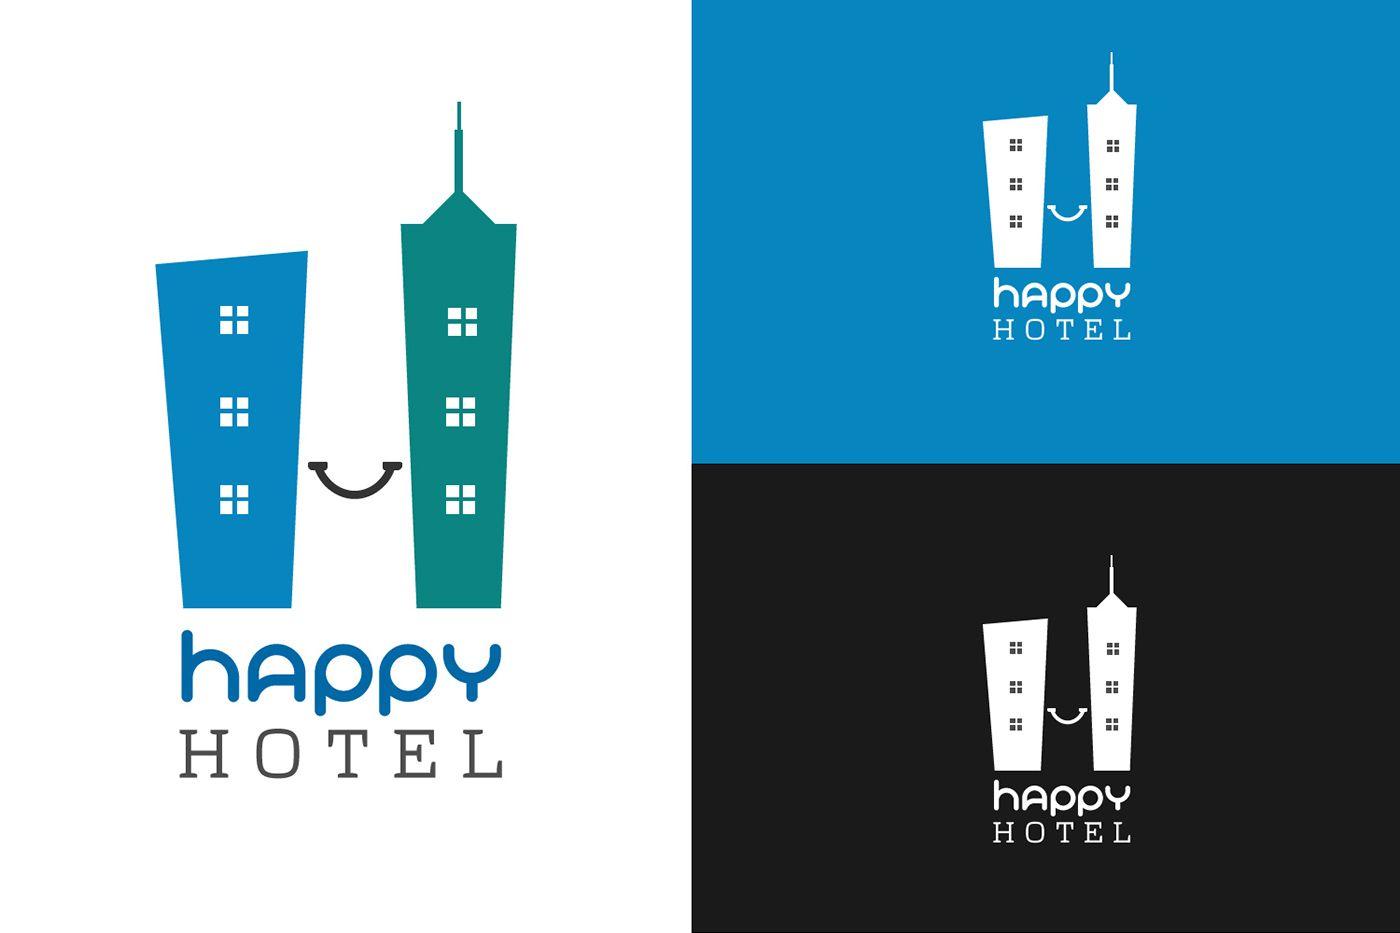 Hotel App Logo - Happy Hotel Logo and App part 1 on Behance